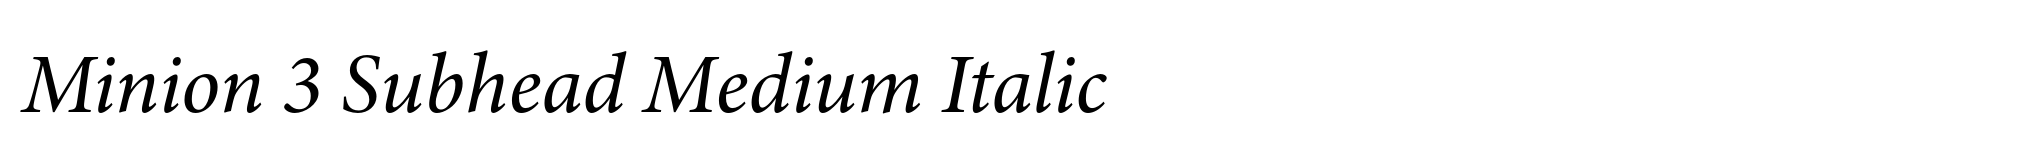 Minion 3 Subhead Medium Italic image